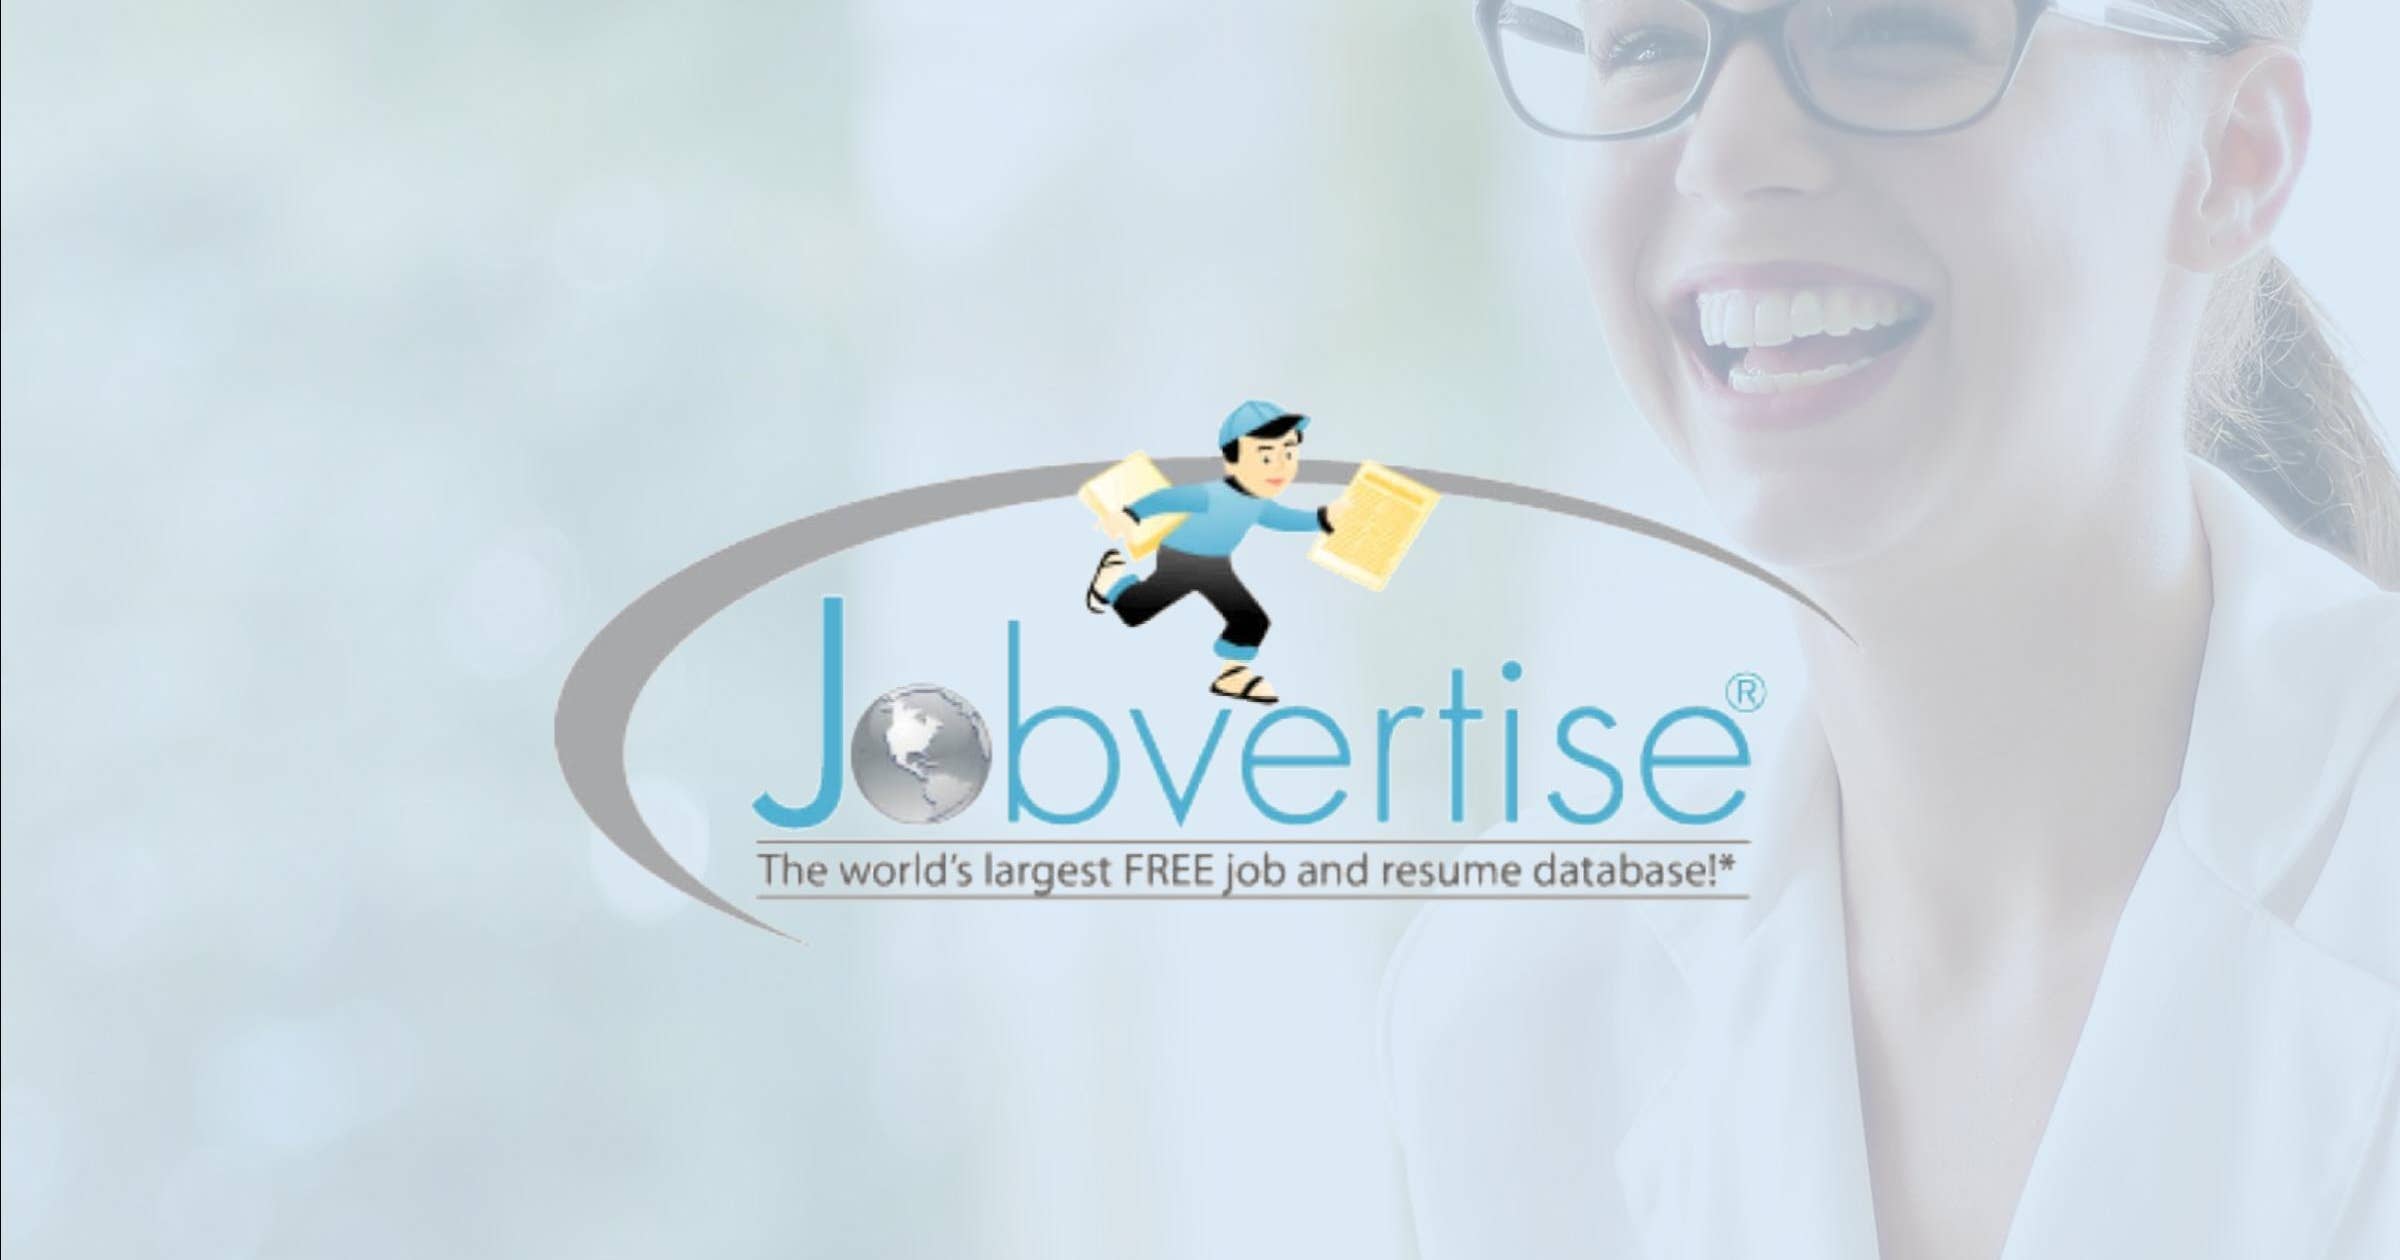 Jobvertise